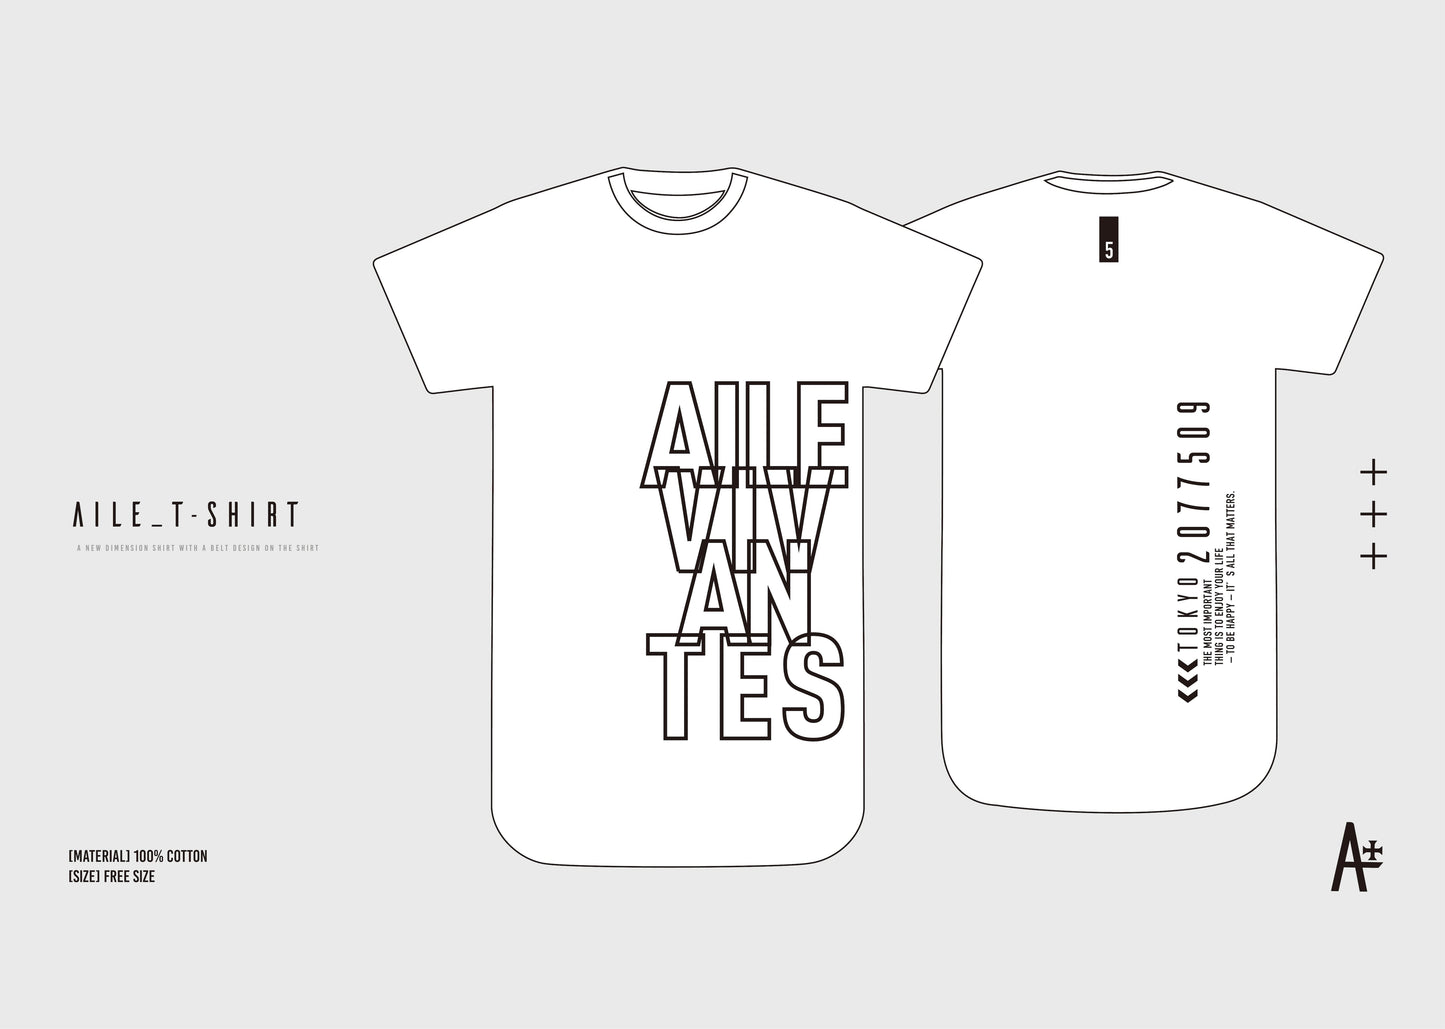 AILE_tatelogo T-shirts